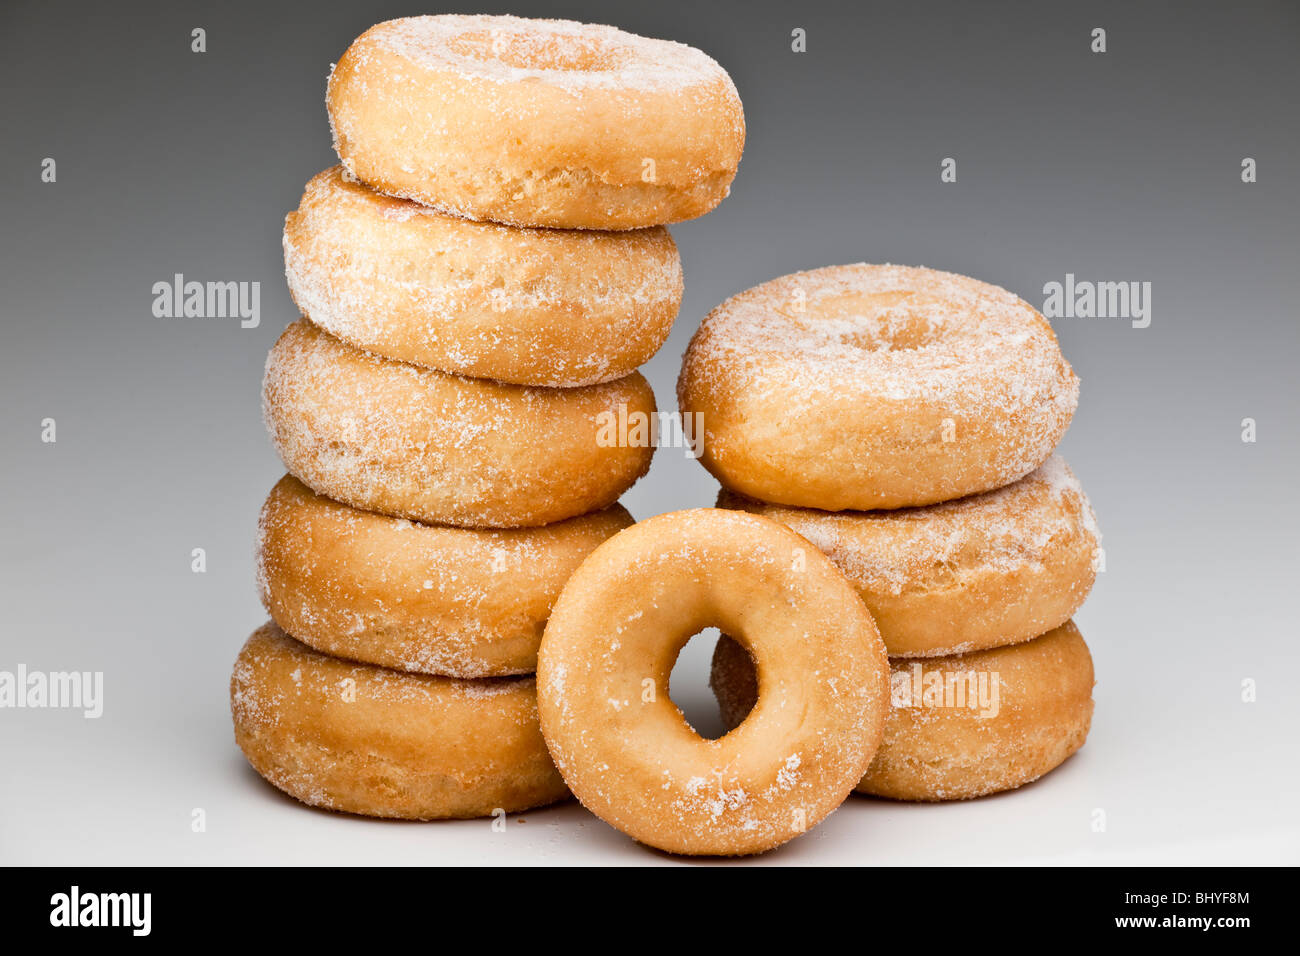 Stack of 9 sugary doughnuts Stock Photo